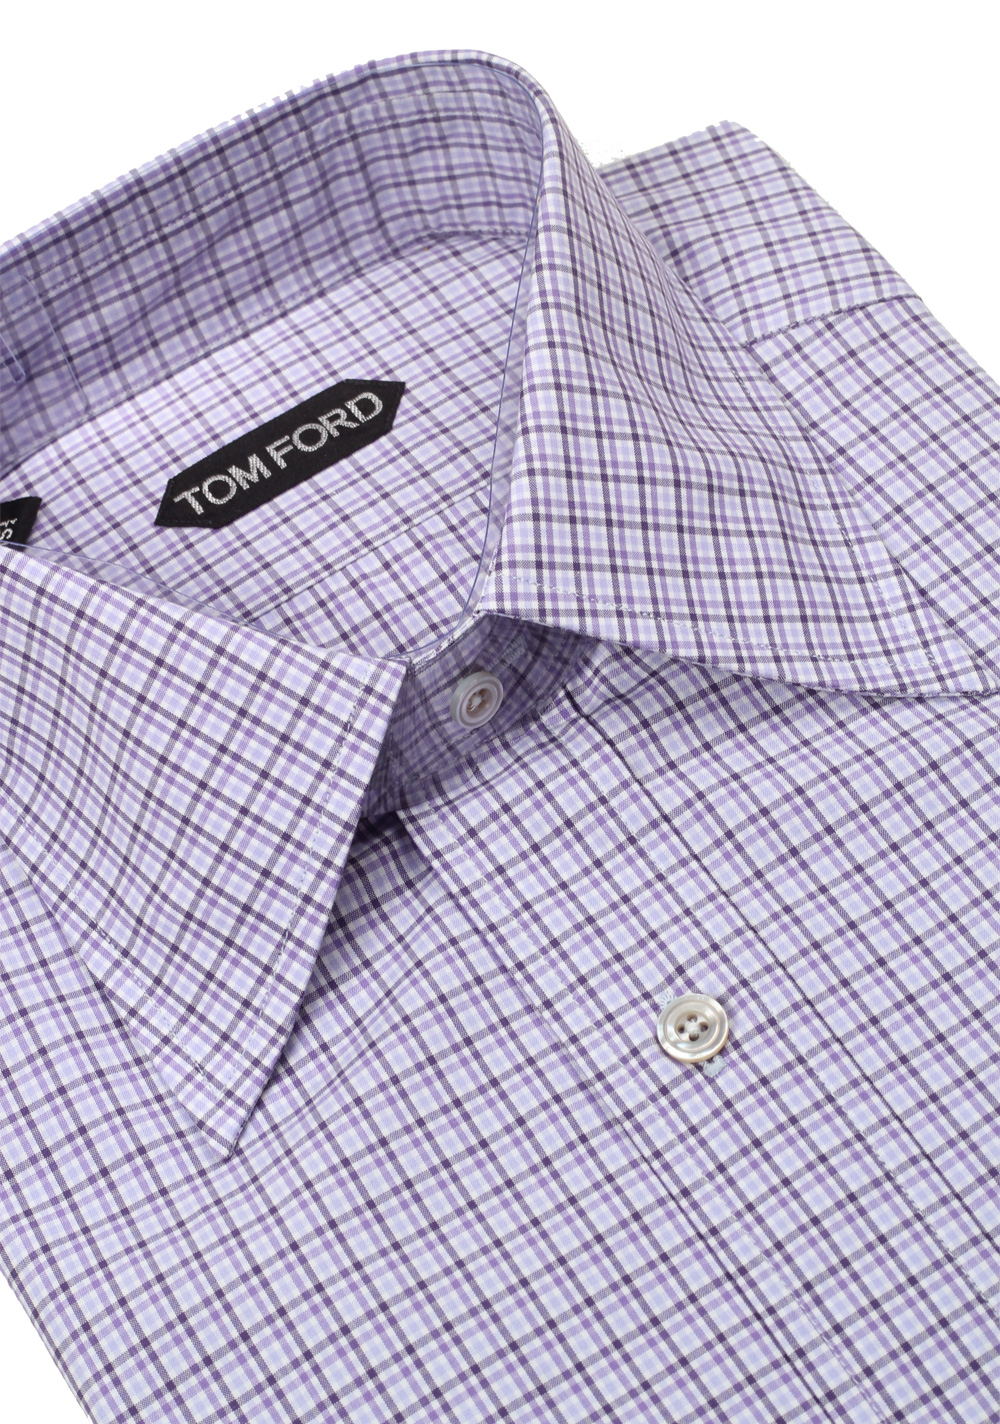 TOM FORD Checked Purple Dress Shirt Size 40 / 15,75 U.S. | Costume Limité